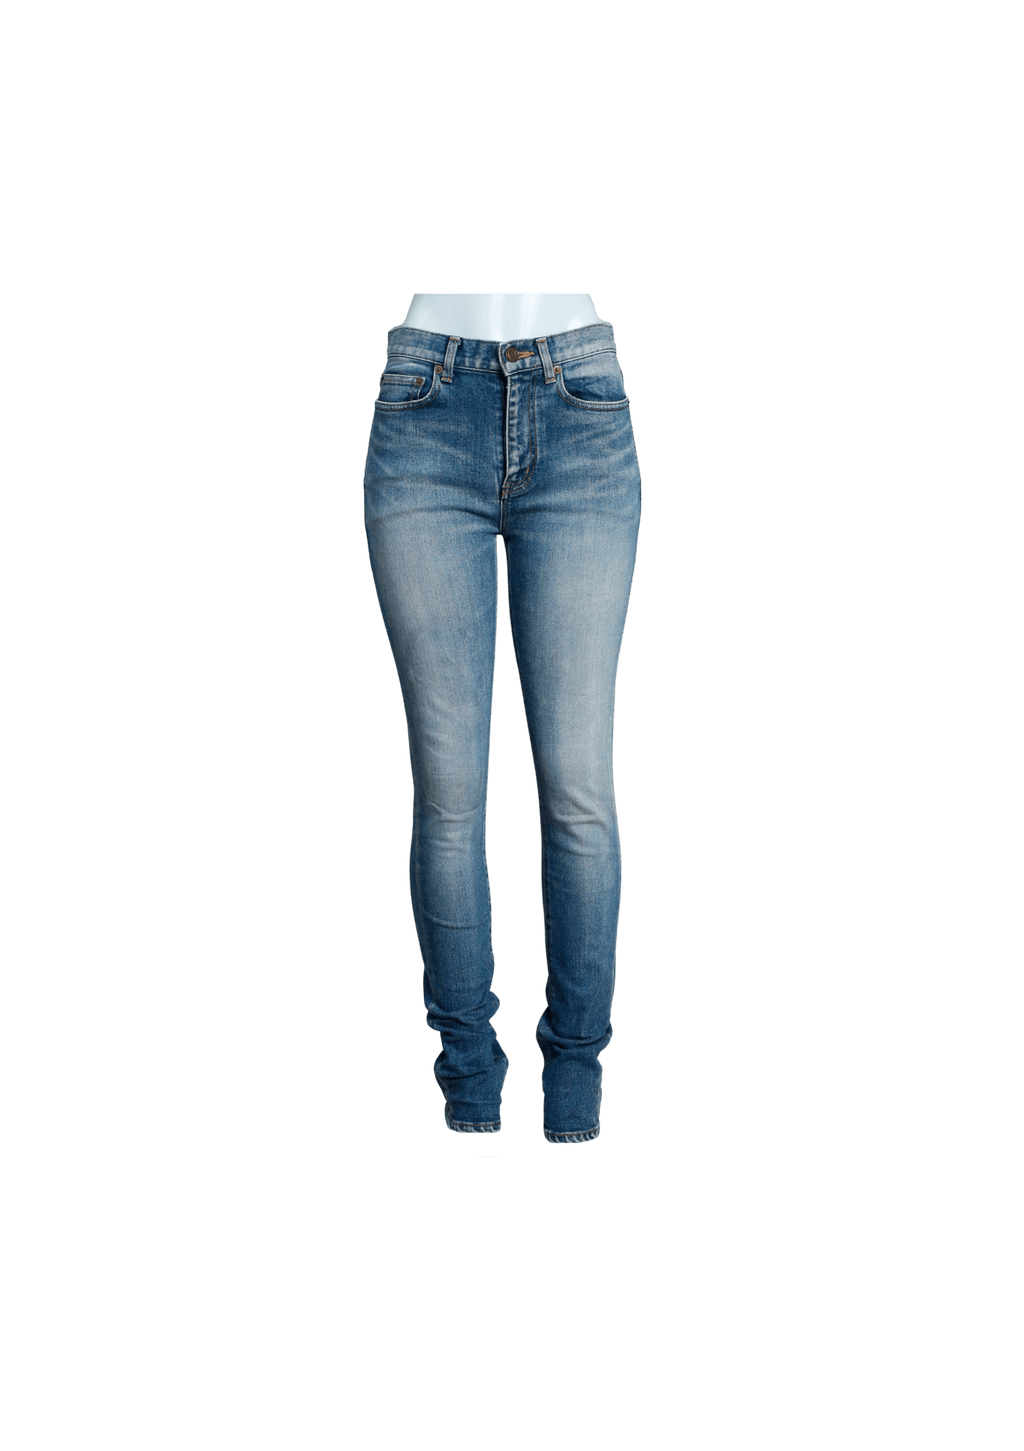 Tiara Giovanna Jeans